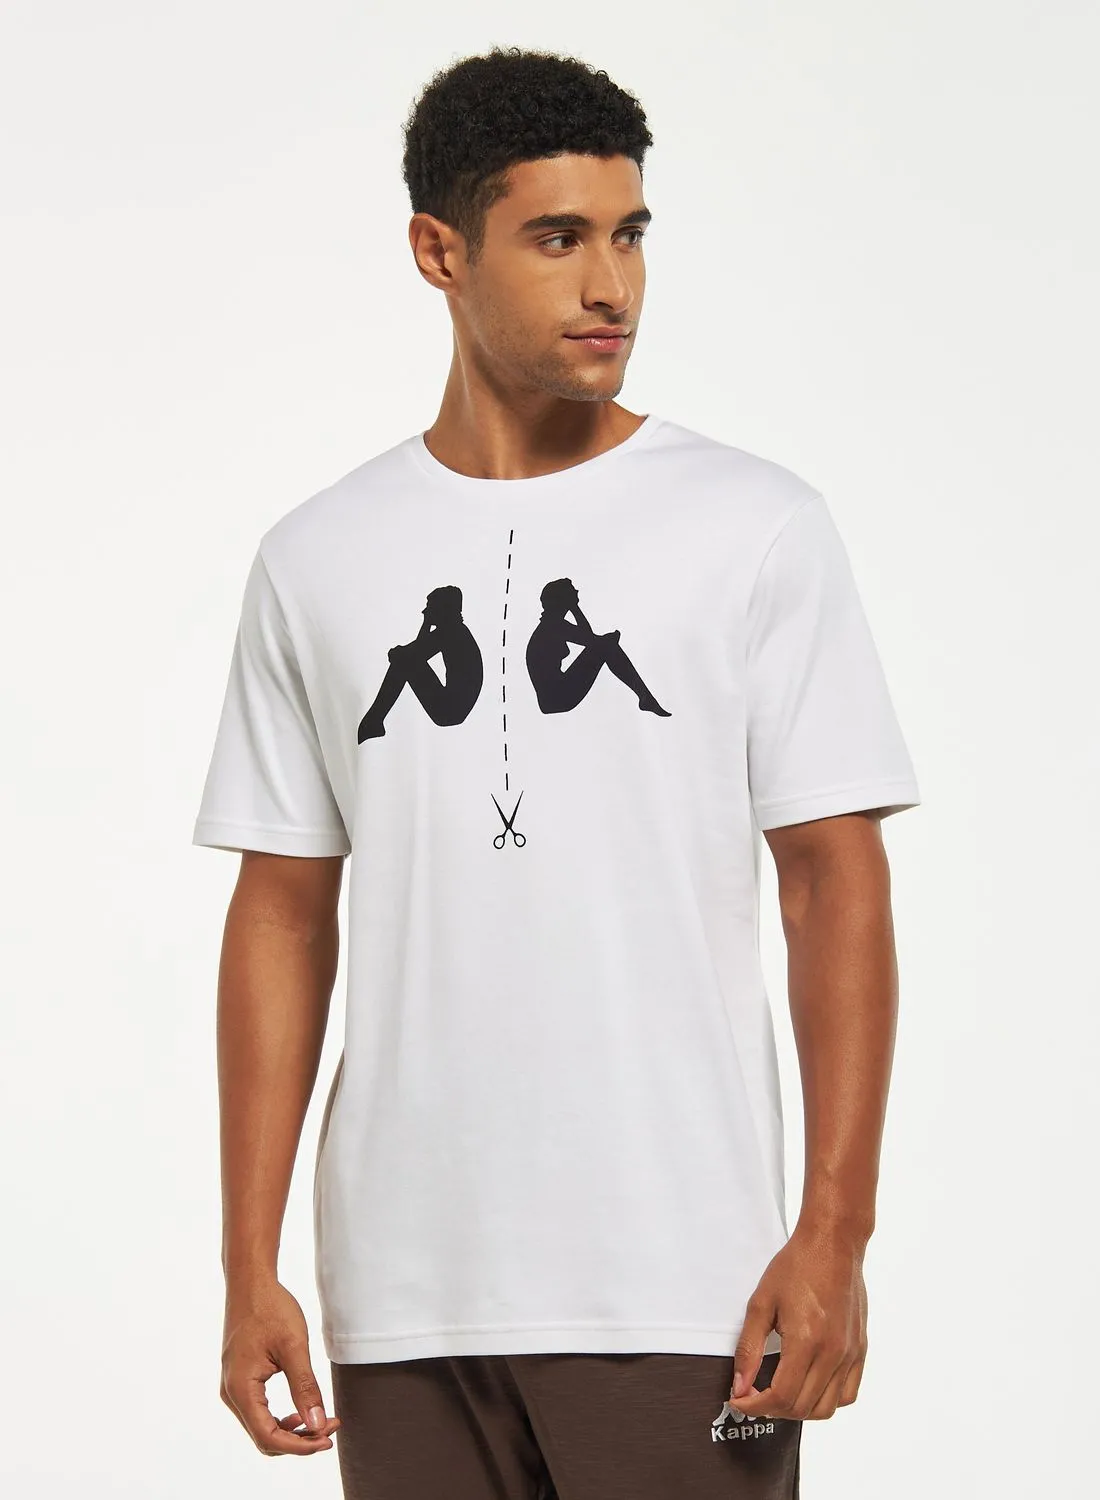 Kappa Logo Print T-Shirt